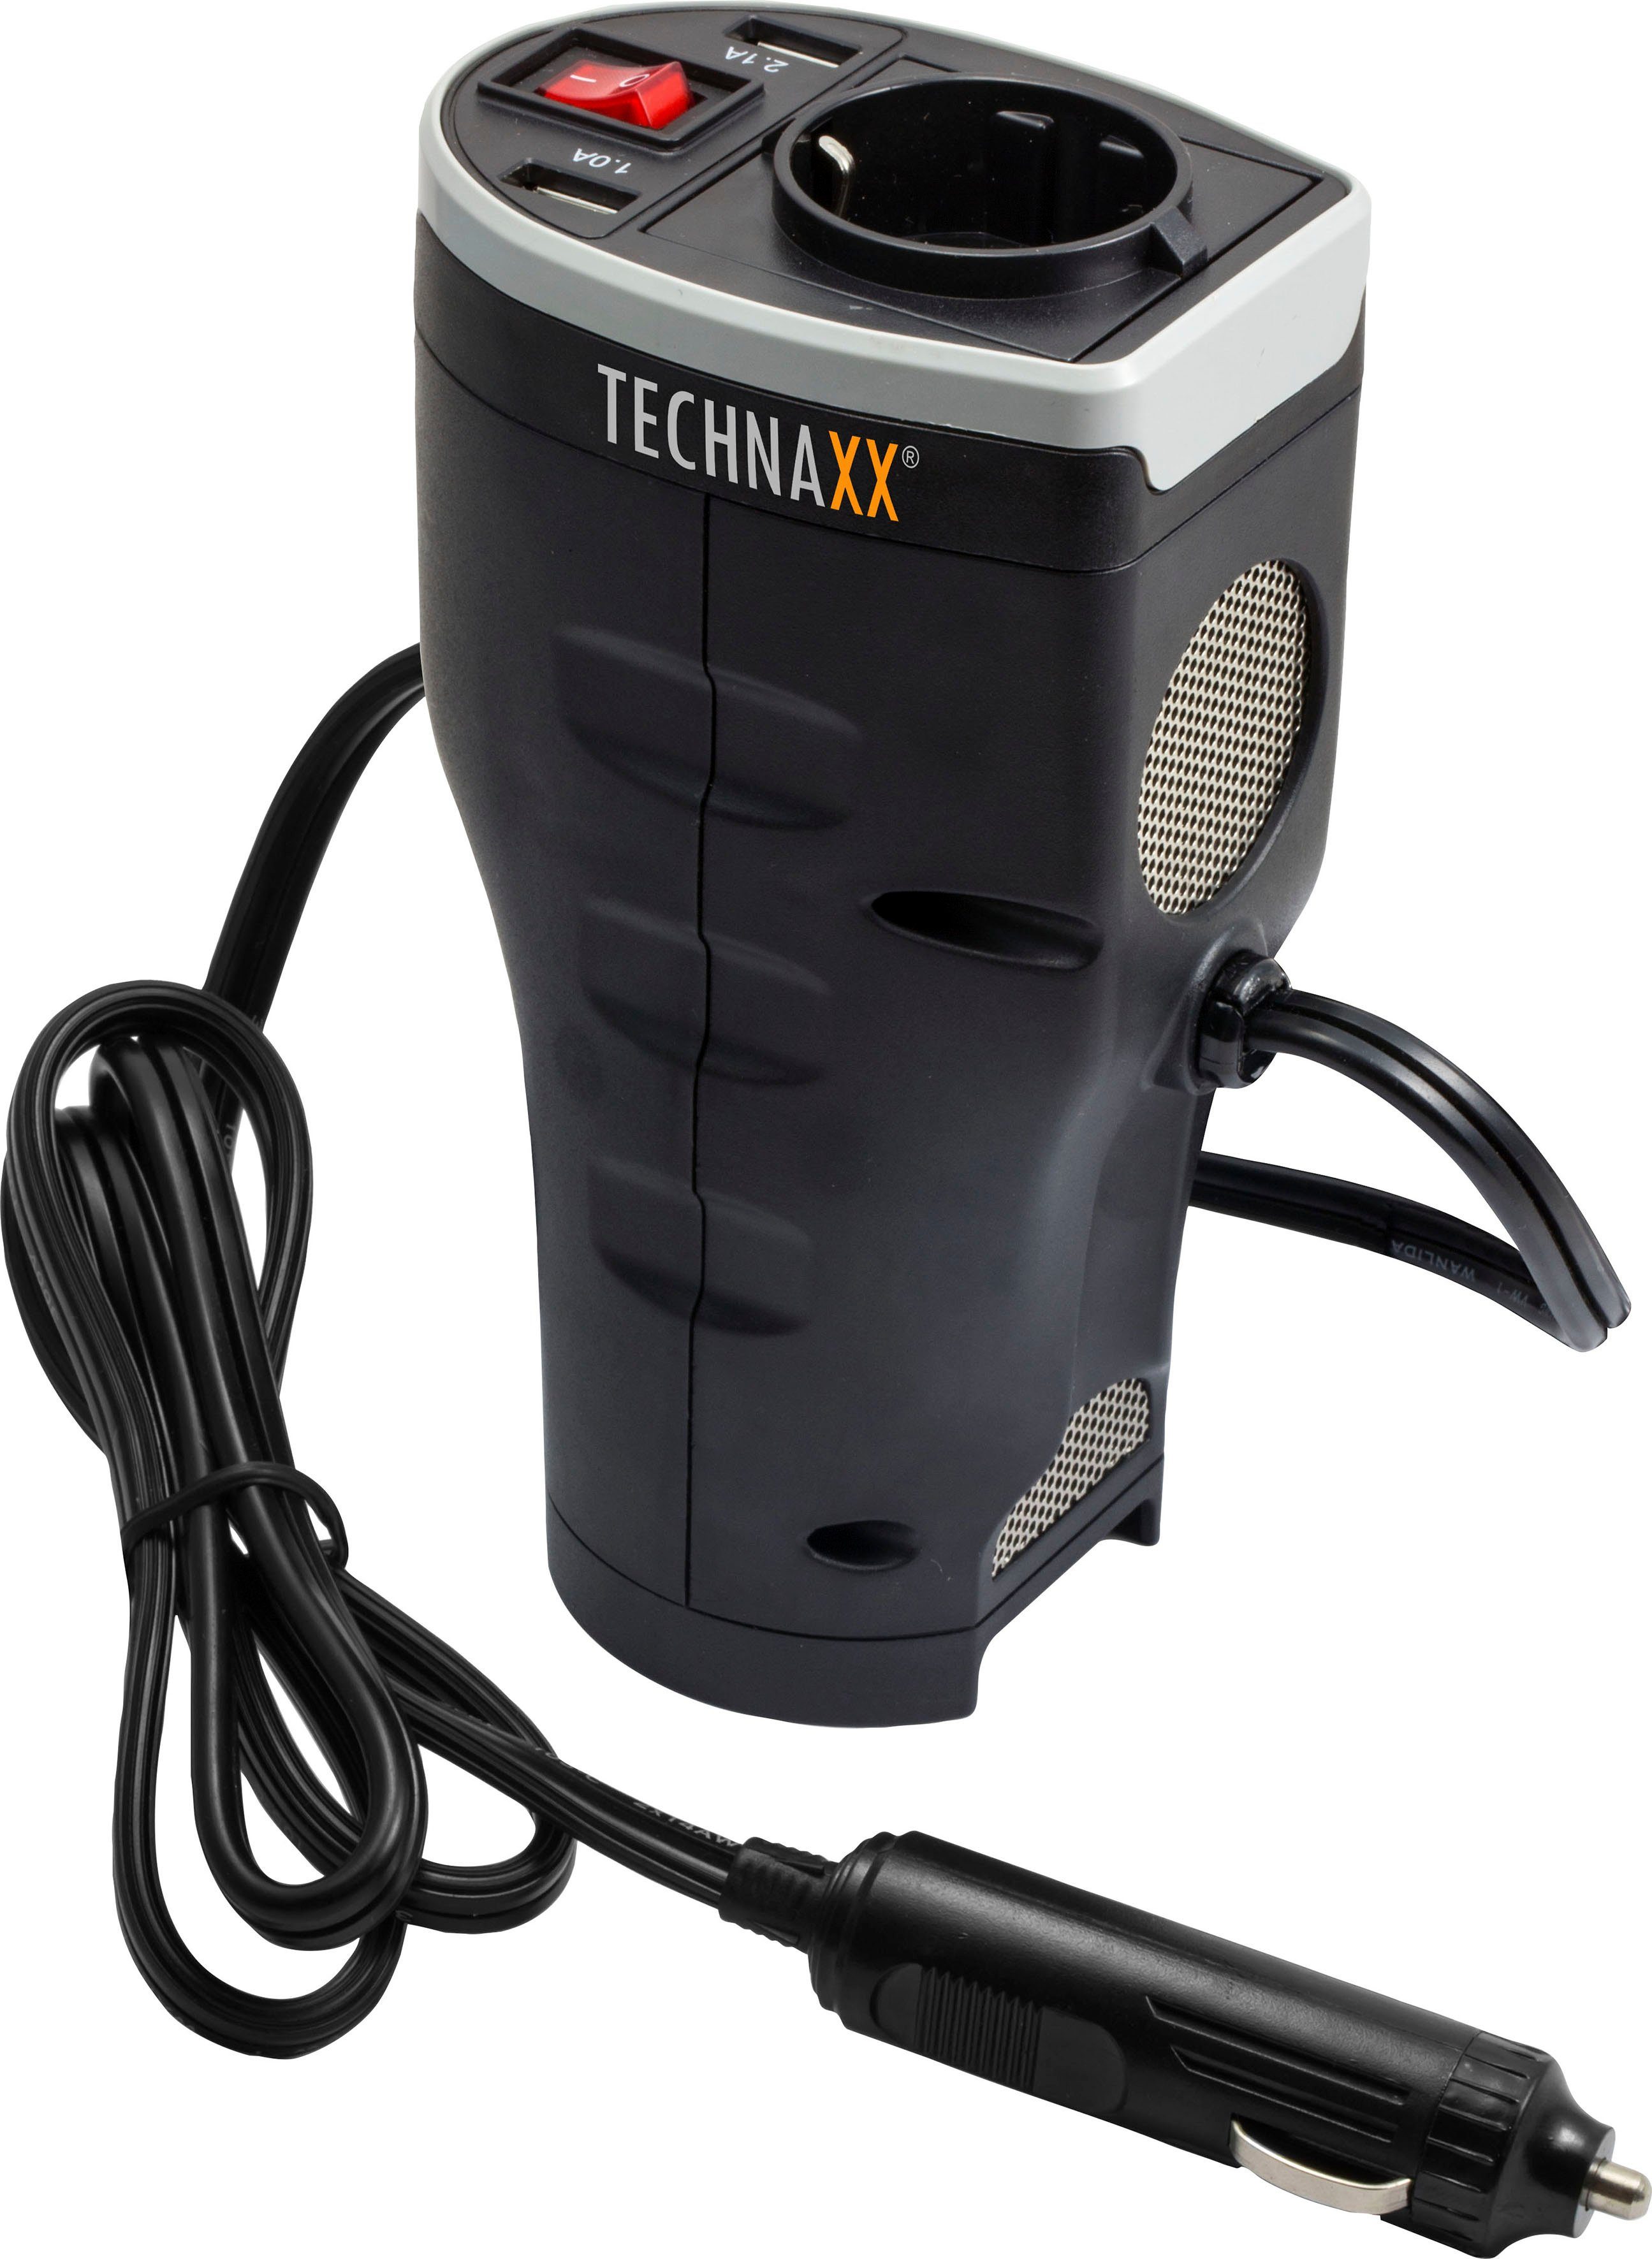 Technaxx Spannungswandler KFZ-SPANNUNGSWANDLER, 12 V DC-Batterieleistung zu  Standard 230V AC-Netzspannung, Schutzkontaktstecker- Anschluss  (AC-Ausgang)mit beleuchtetem Ein-/Ausschalter | Zigarettenanzünder-Adapter